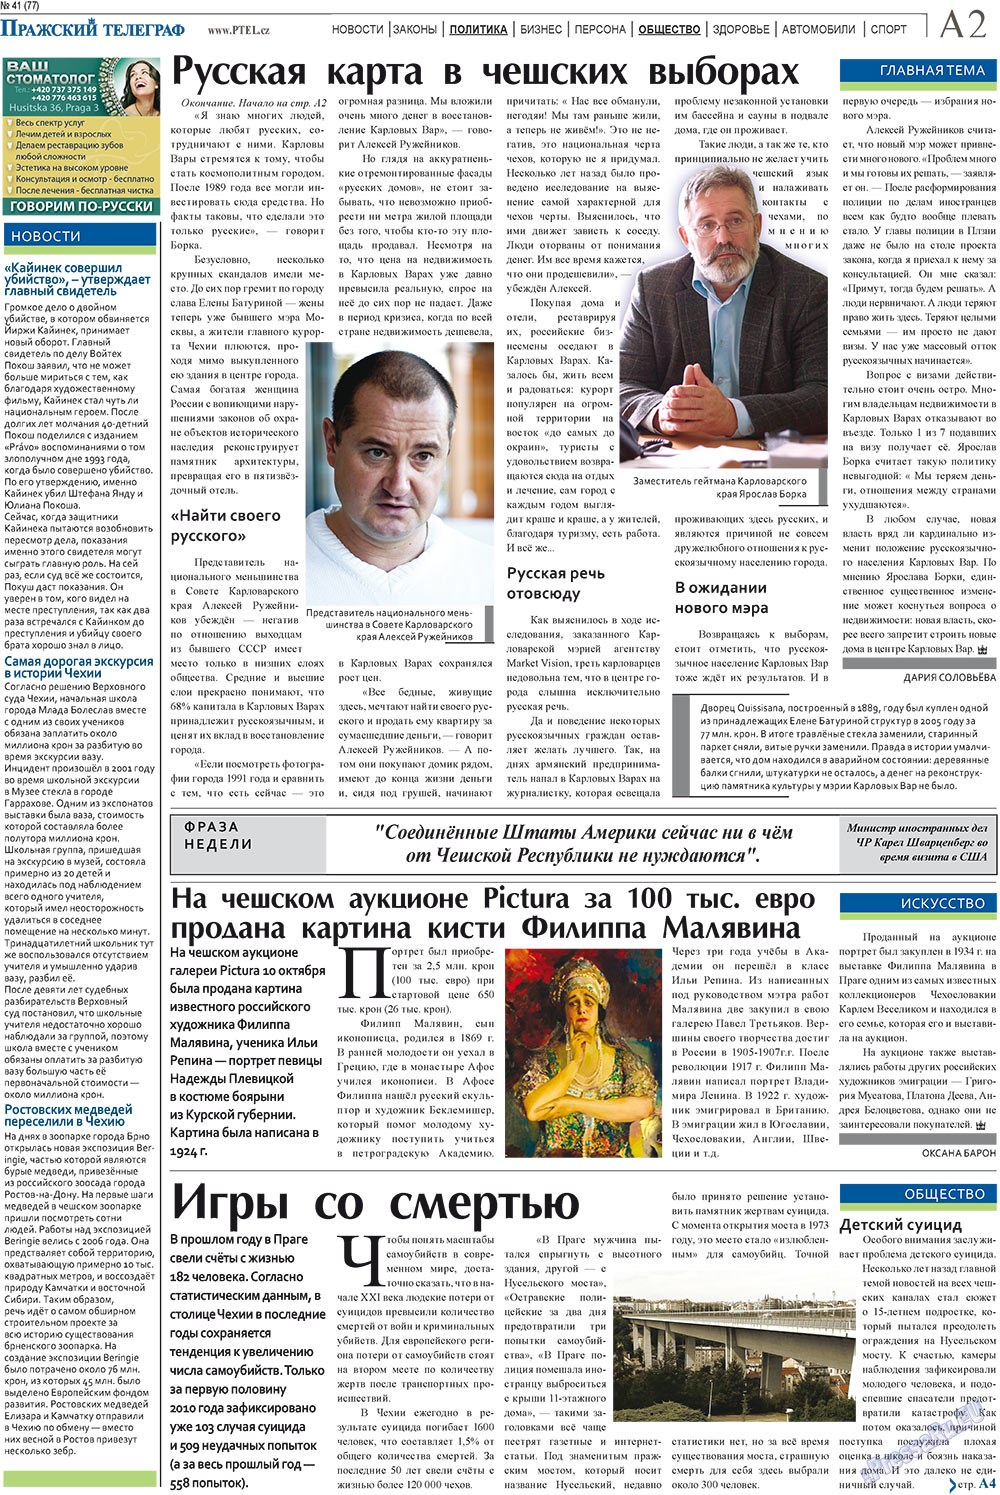 Пражский телеграф, газета. 2010 №41 стр.2